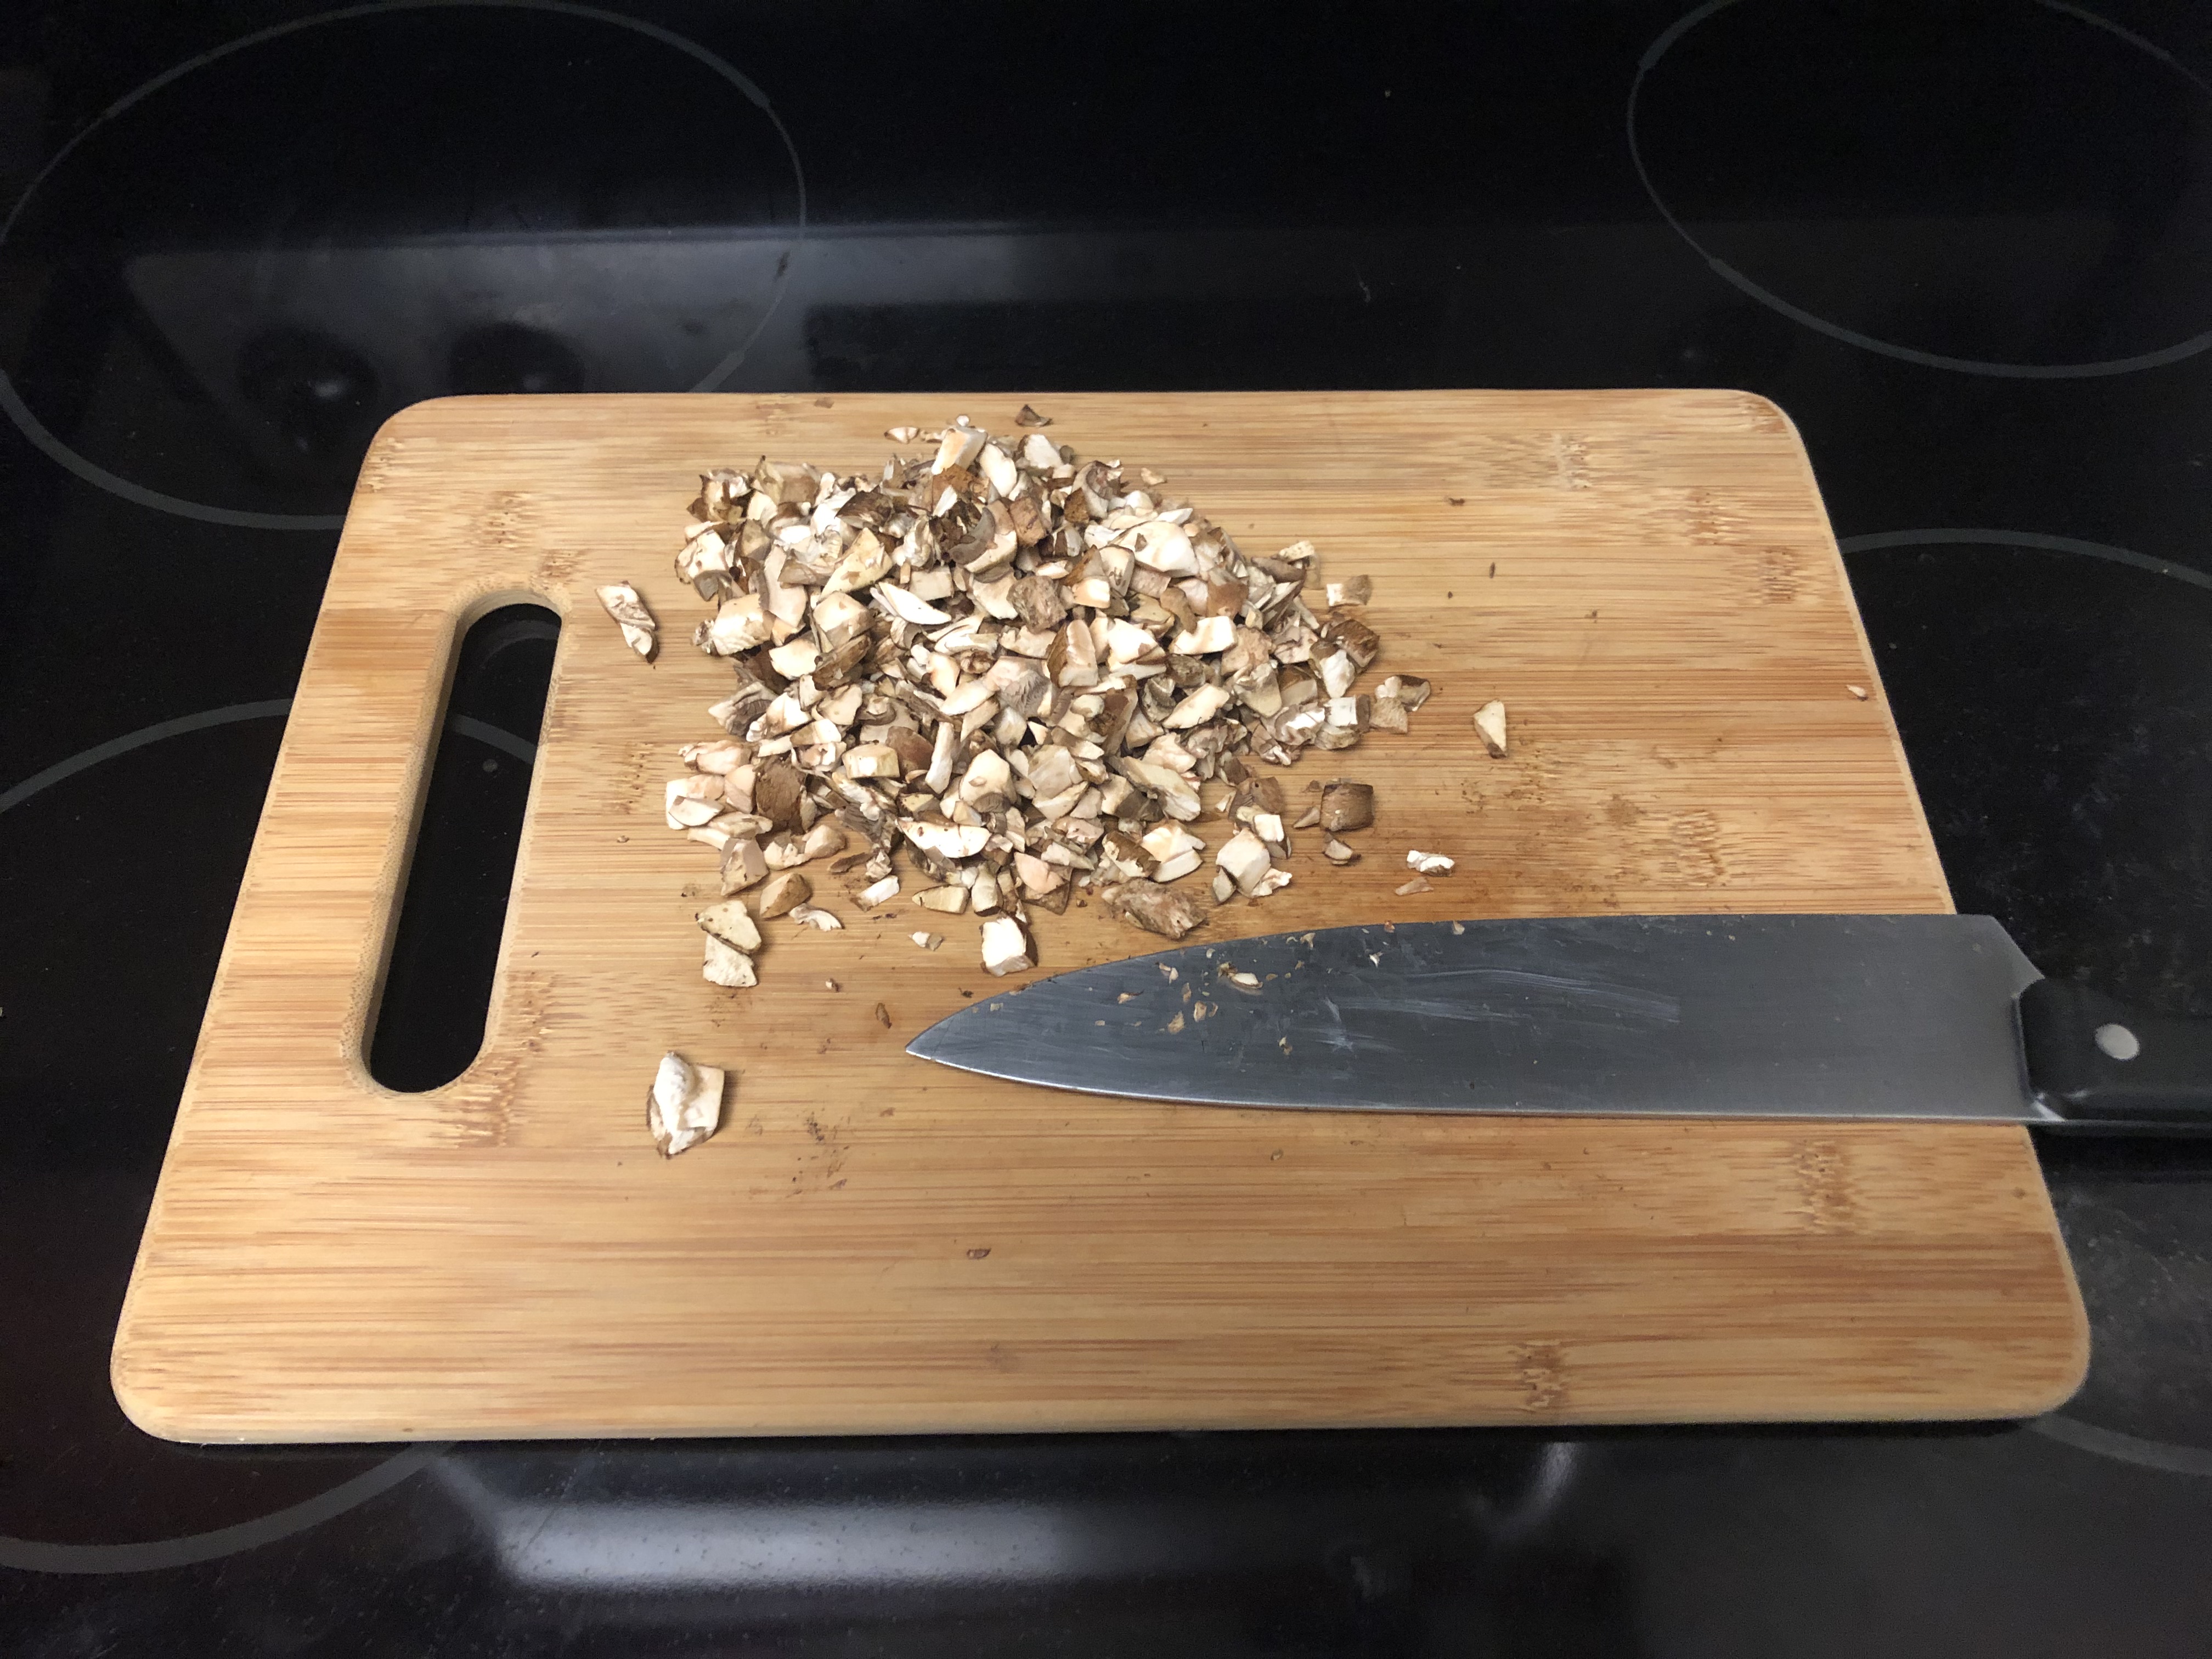 Chopped mushrooms on cutting board